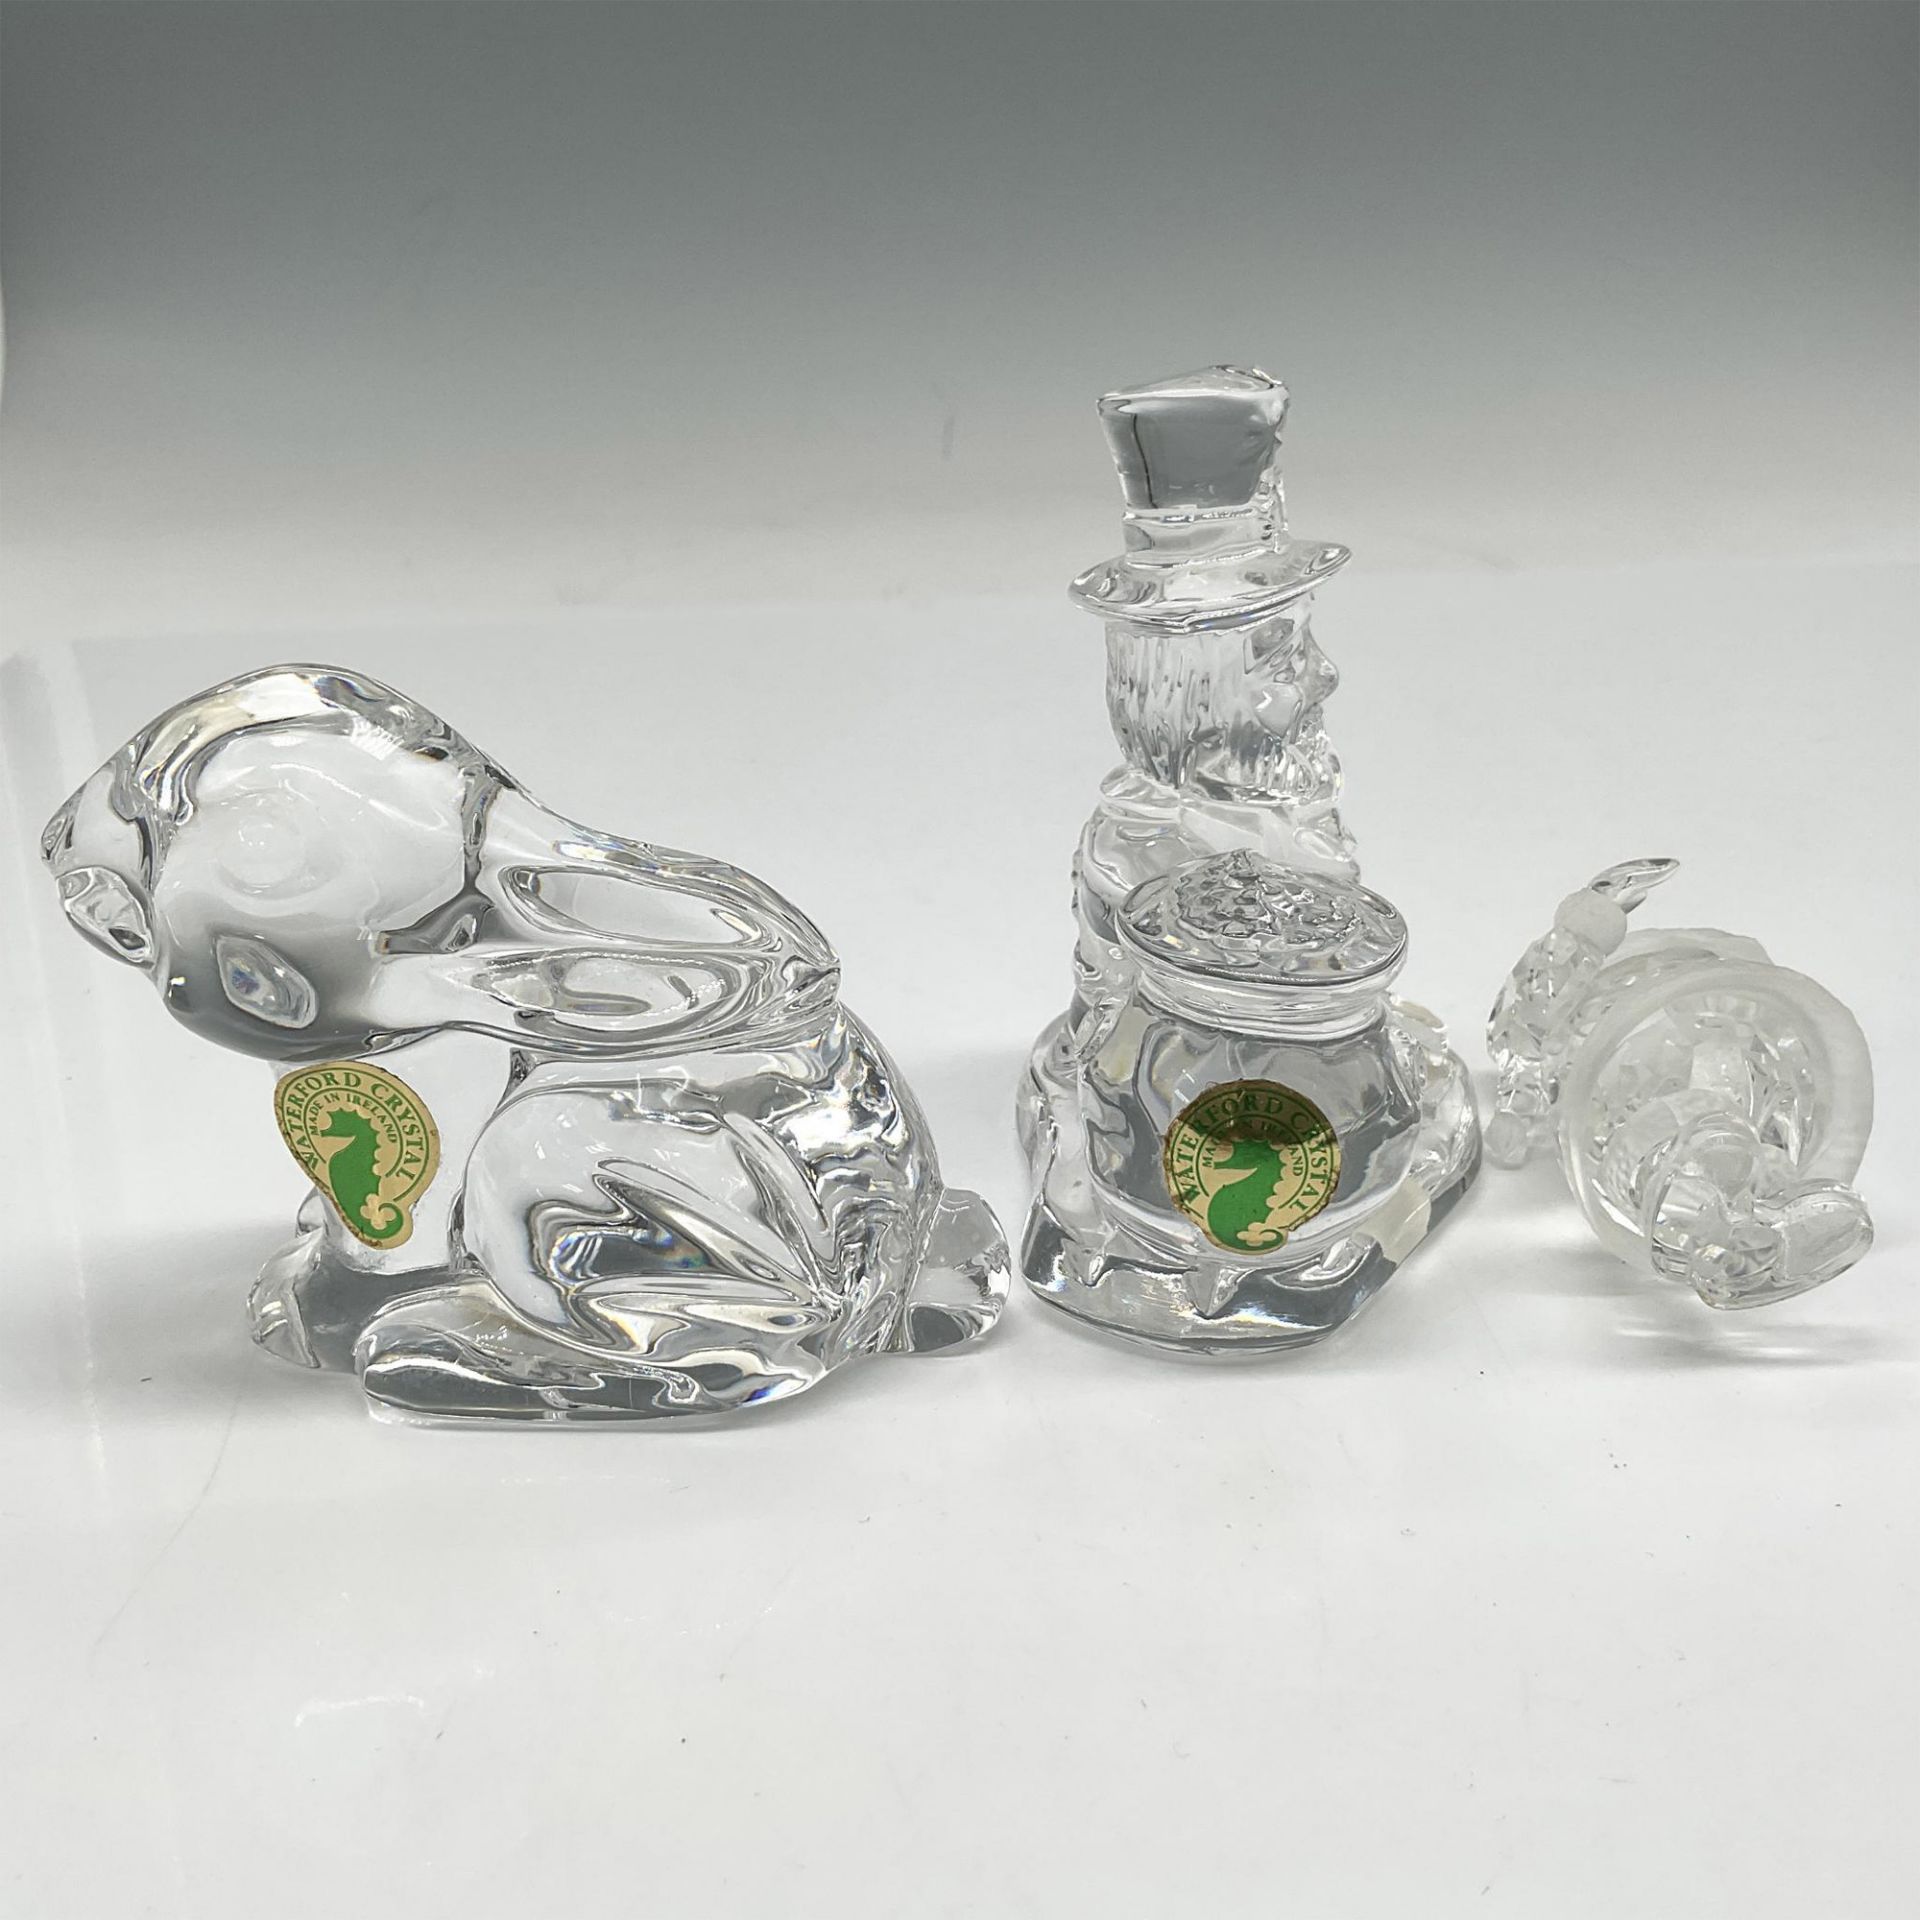 3pc Waterford & Swarovski Crystal Figurines - Image 3 of 3